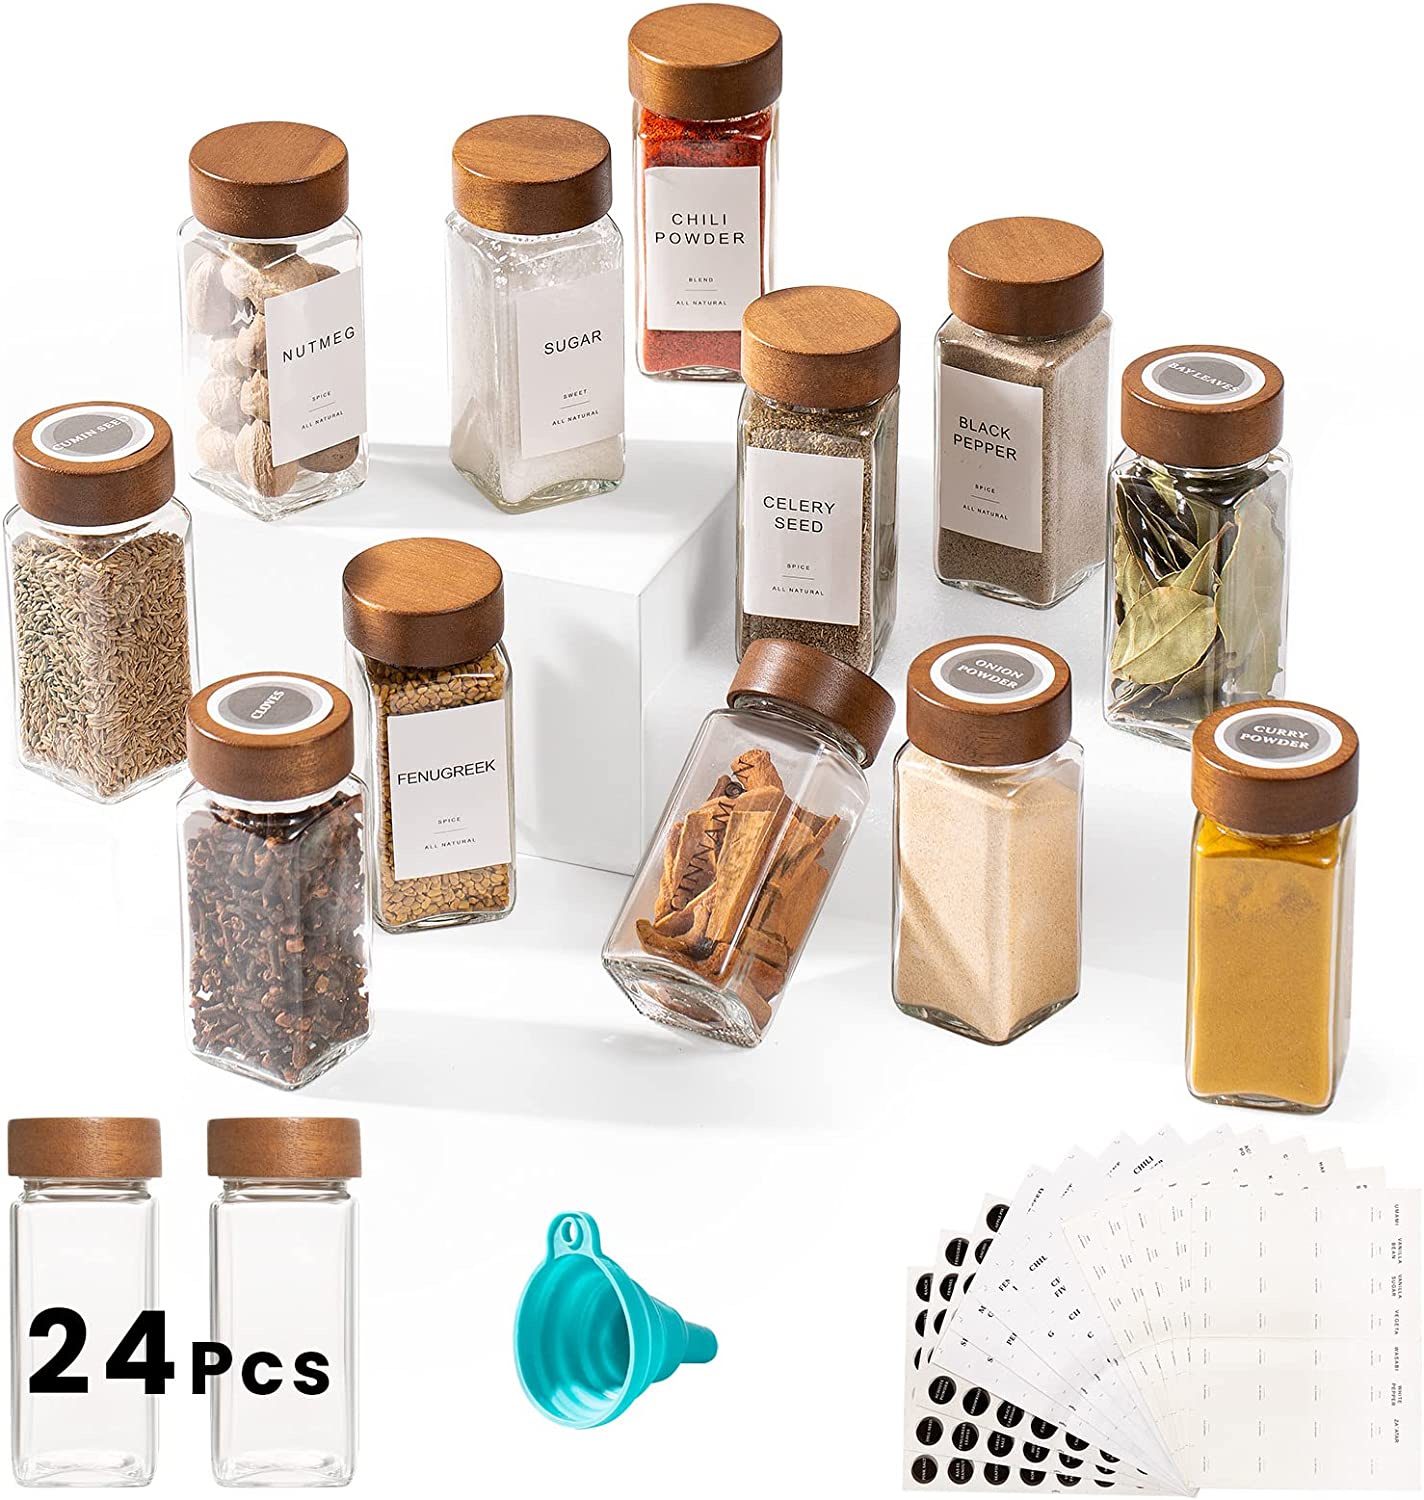 Spice Jar WholeSale - Price List, Bulk Buy at